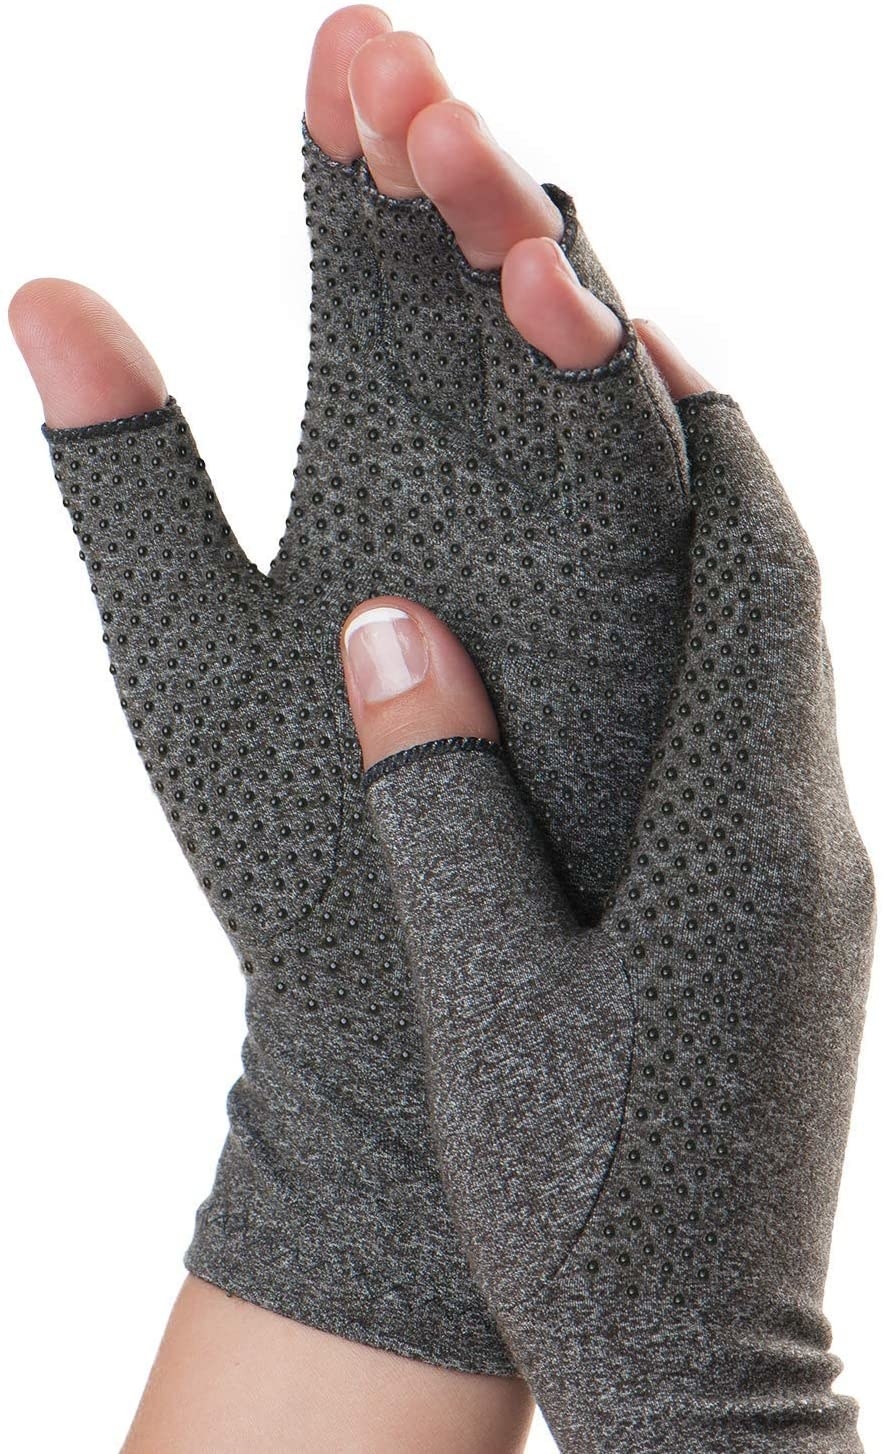 Hands wearing compression gloves